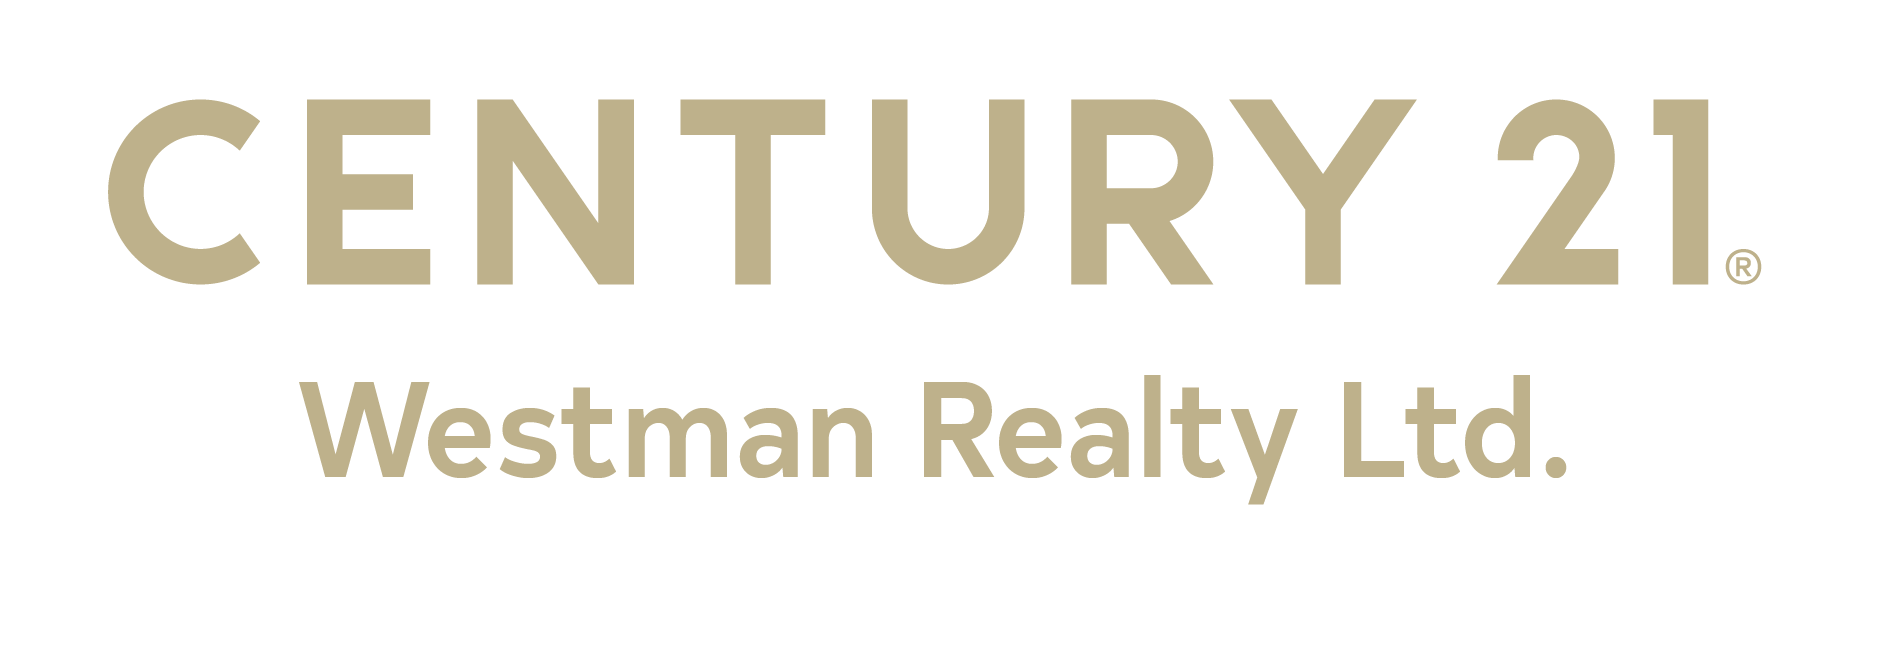 Century 21 Westman Realty